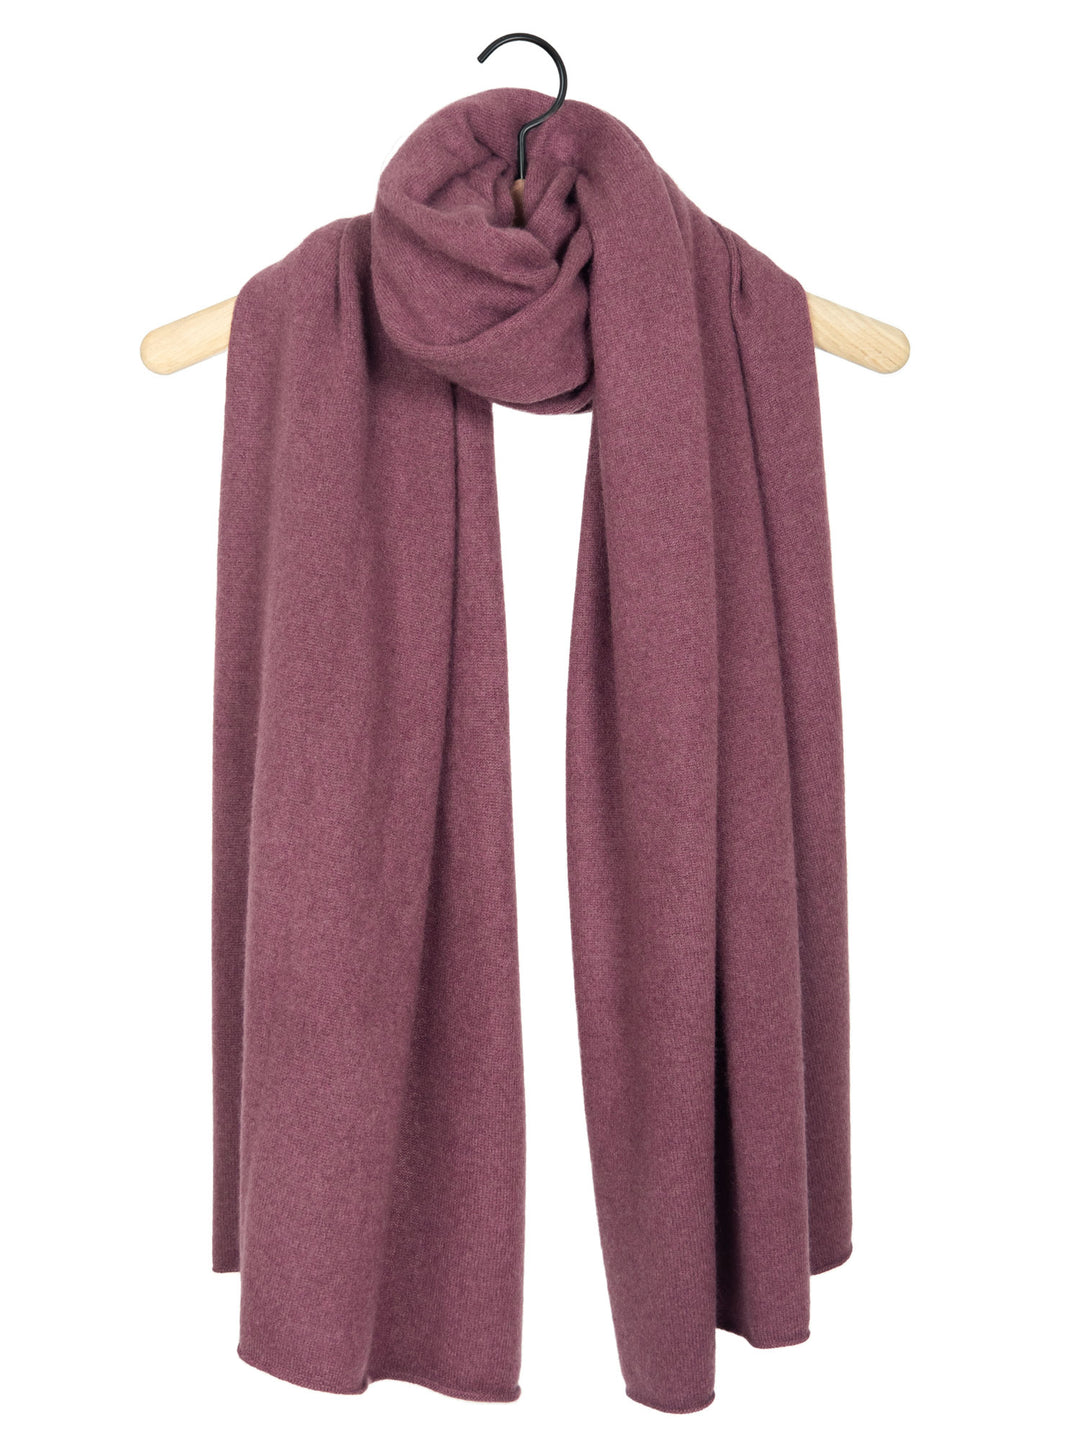 Cashmere scarf "Signature" in 100% cashmere. Color: Wild Plum. Scandinavian design by Kashmina